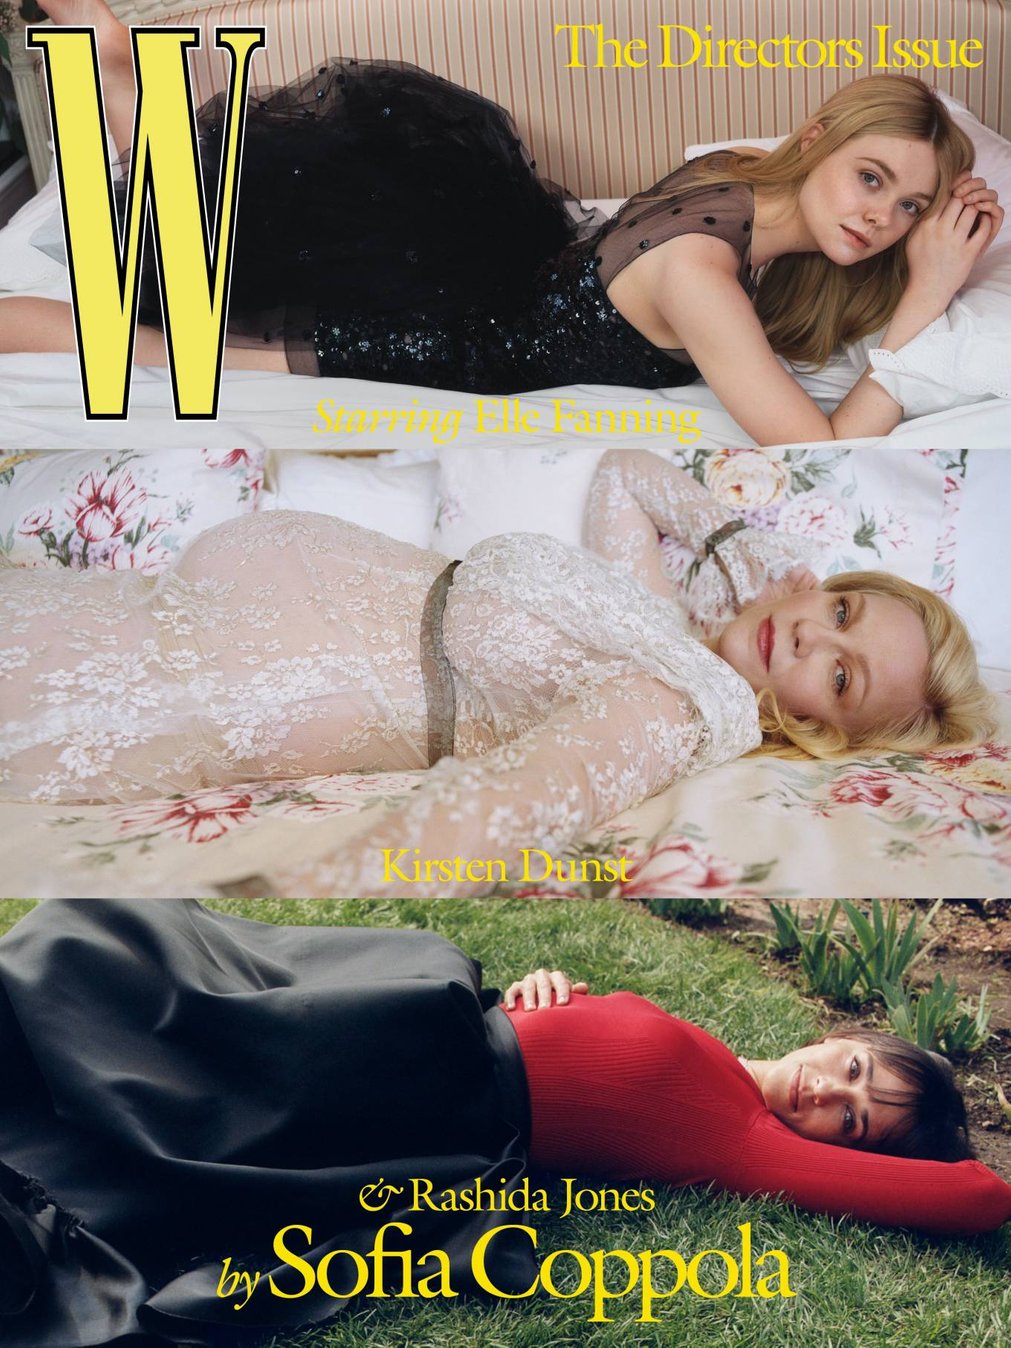 Elle Fanning, Kirsten Dunst and Rashida Jones - W Magazine (March 2021)